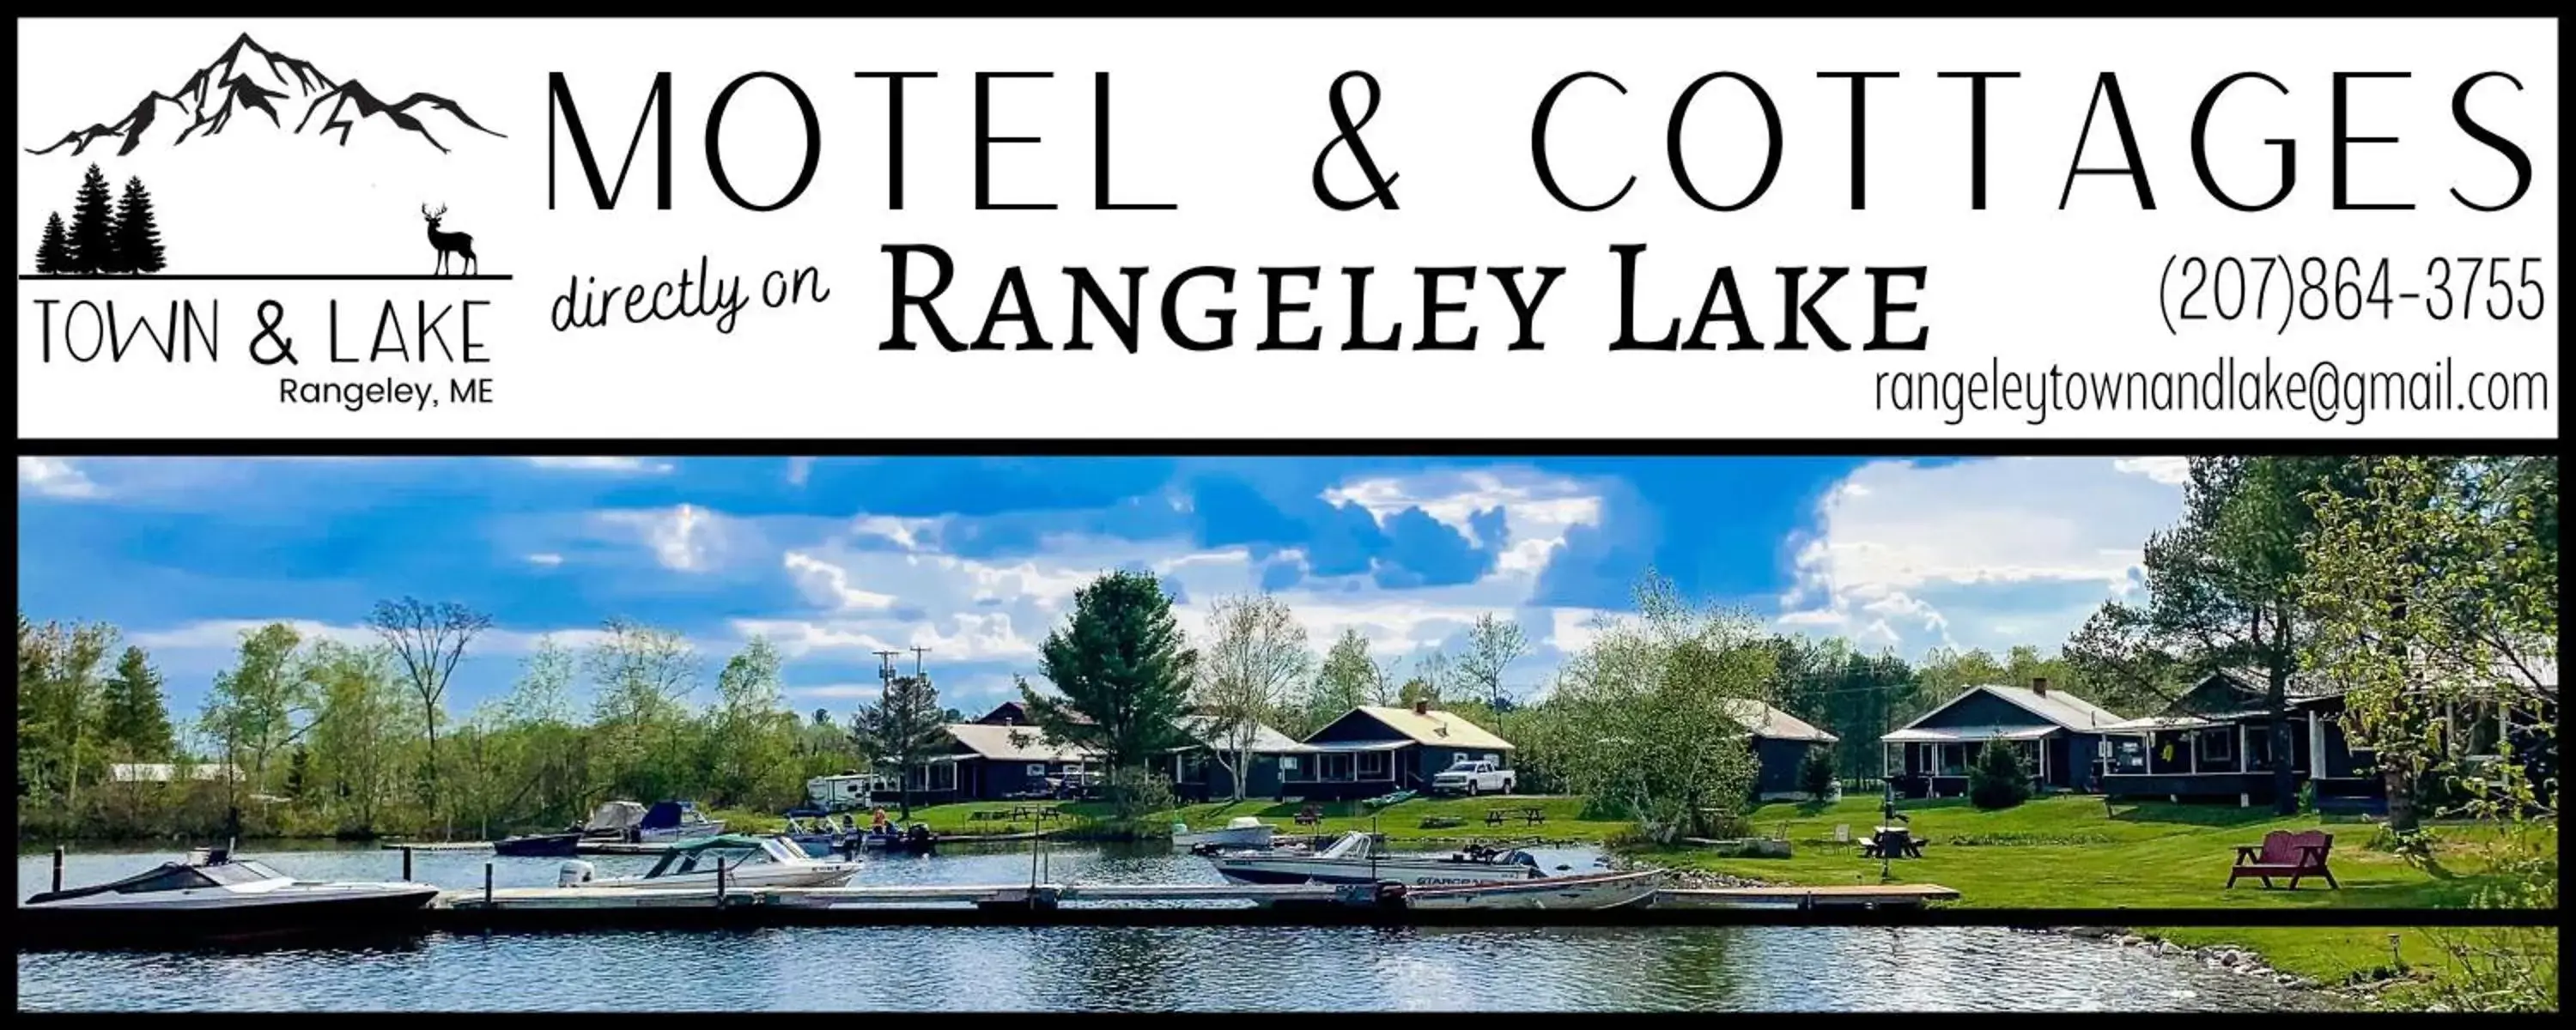 Rangeley Town & Lake